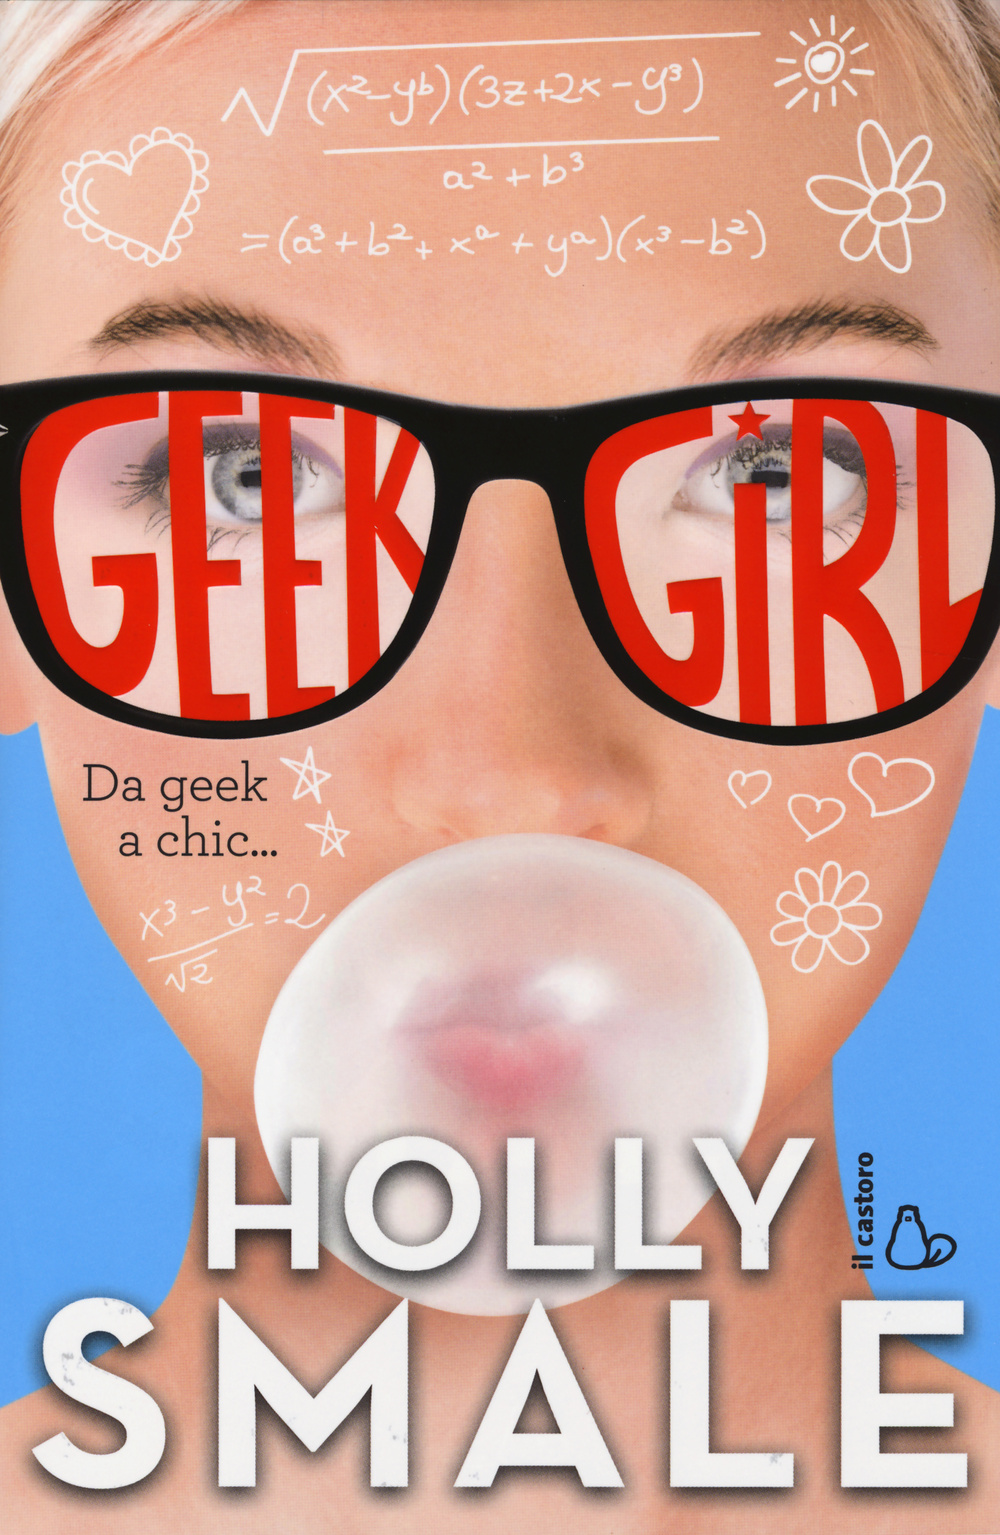 Da geek a chic... Geek girl. Vol. 1